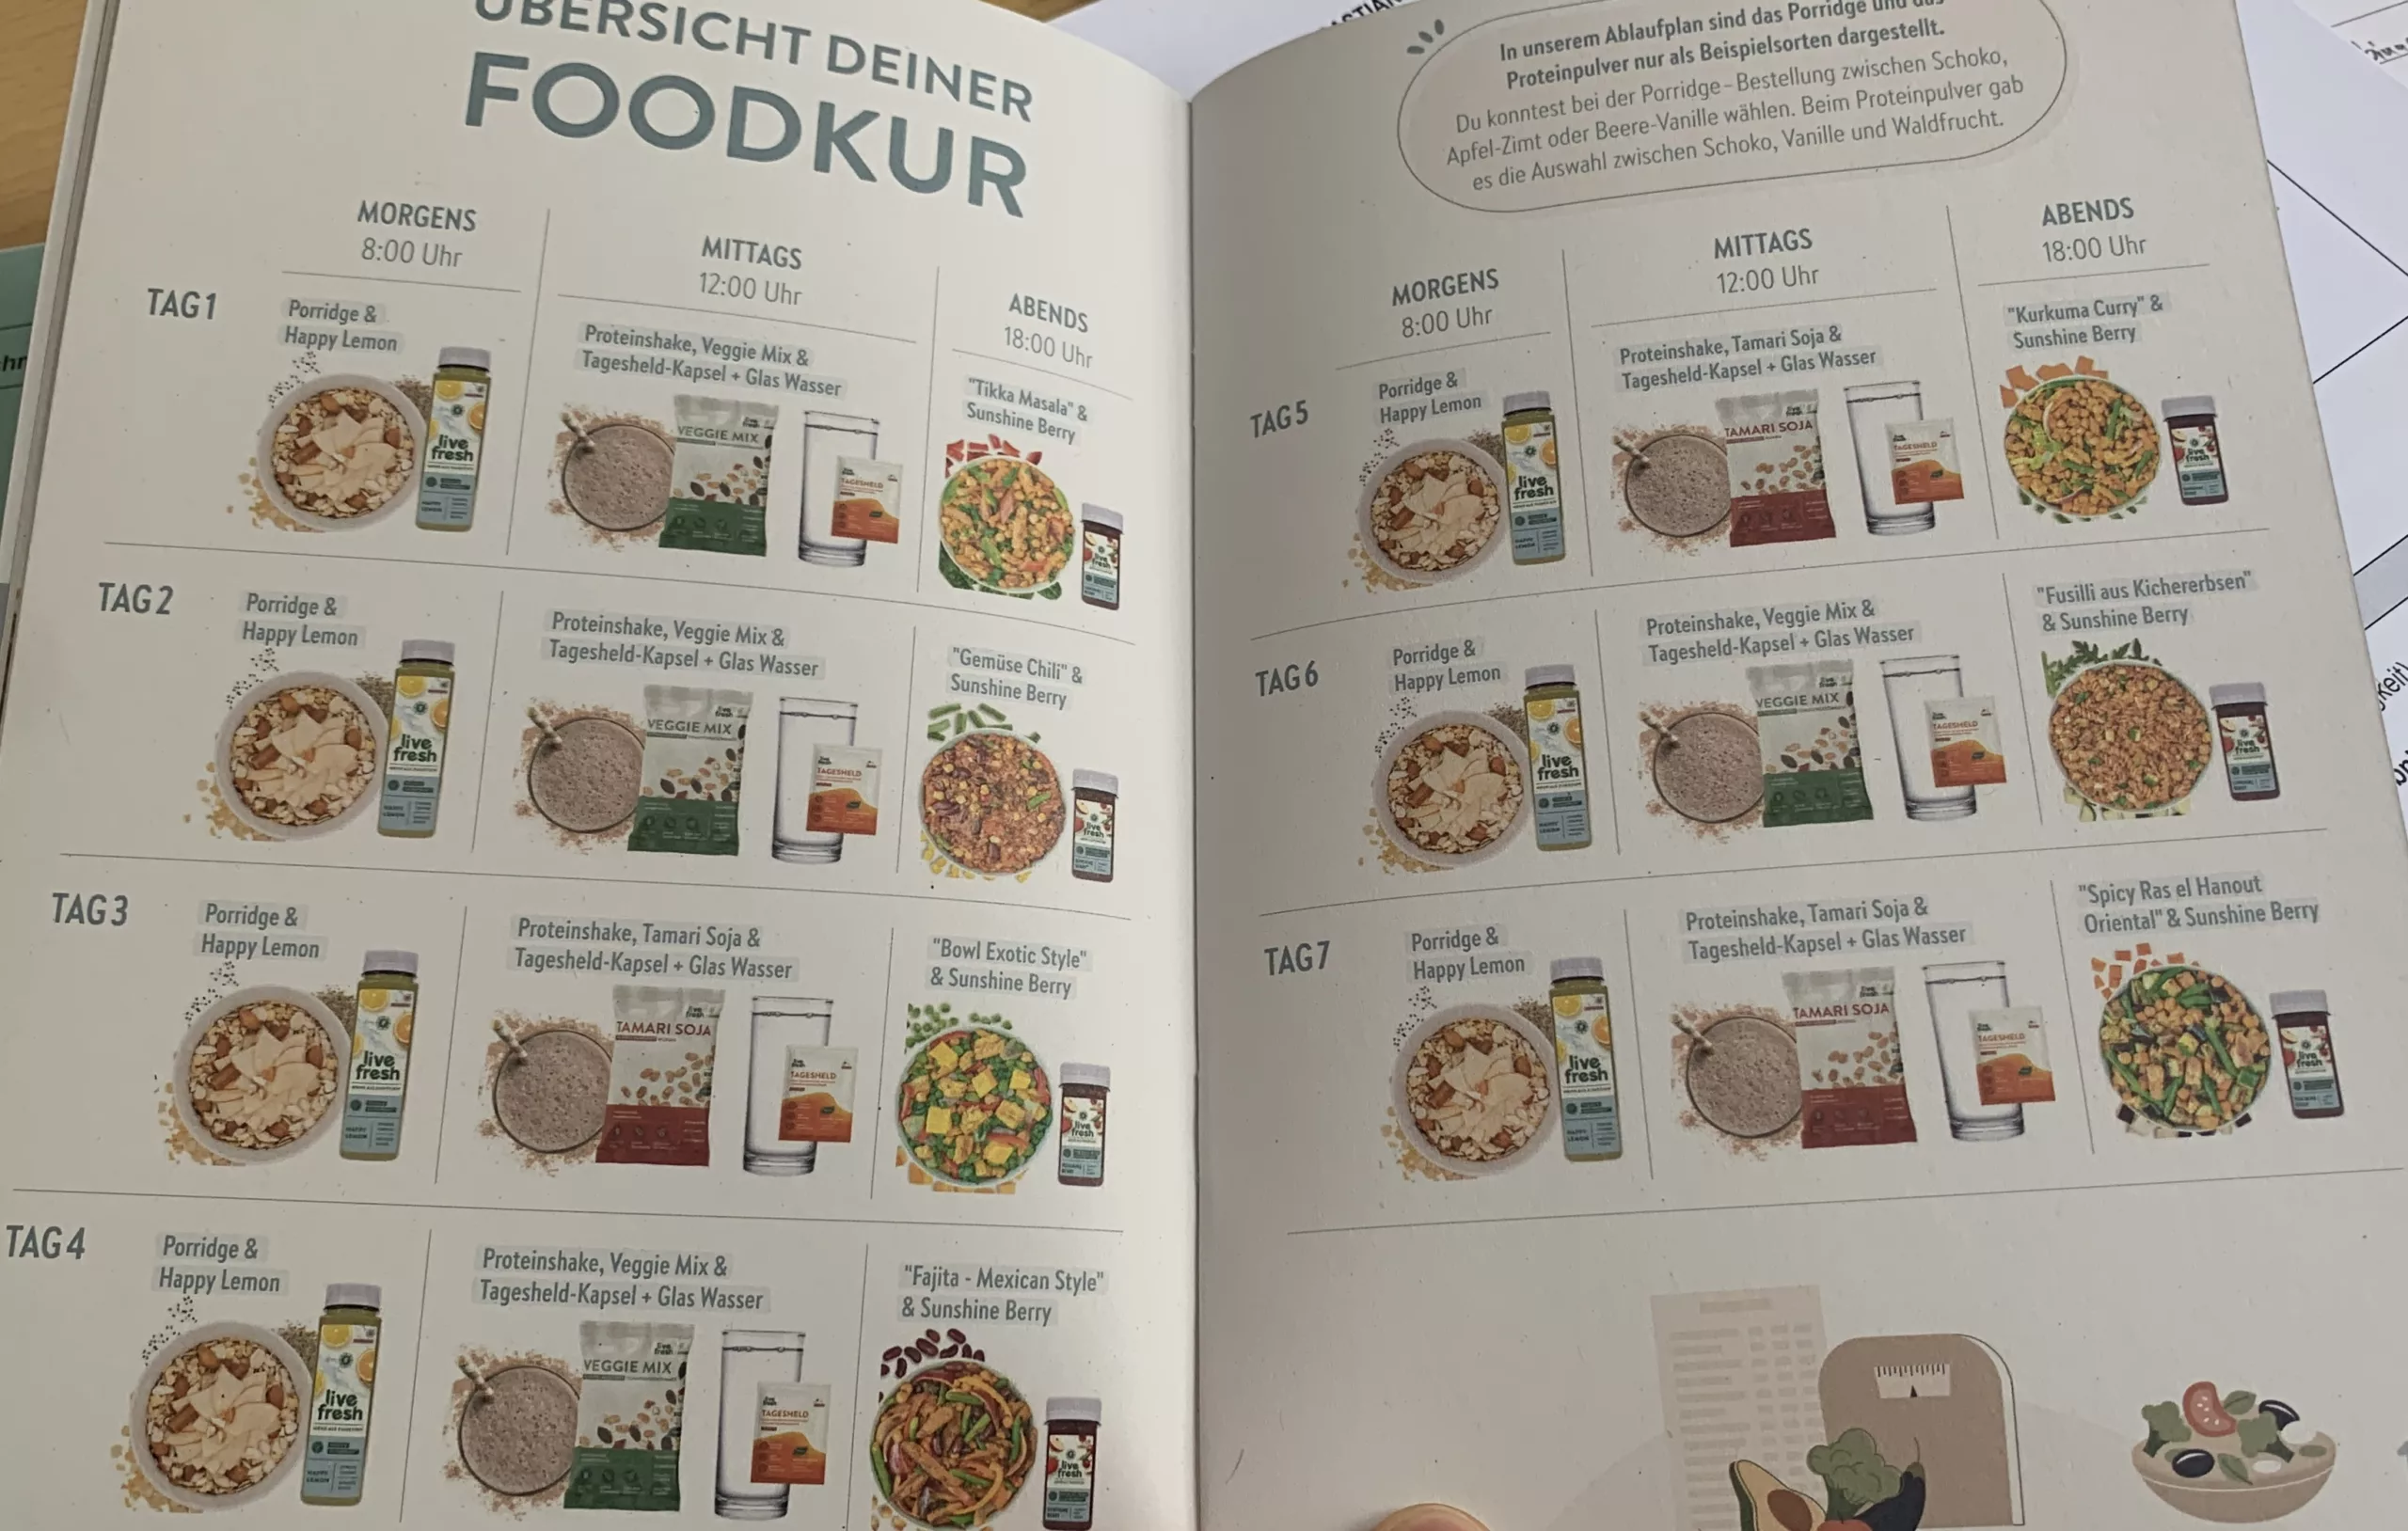 LiveFresh Foodkur Guide